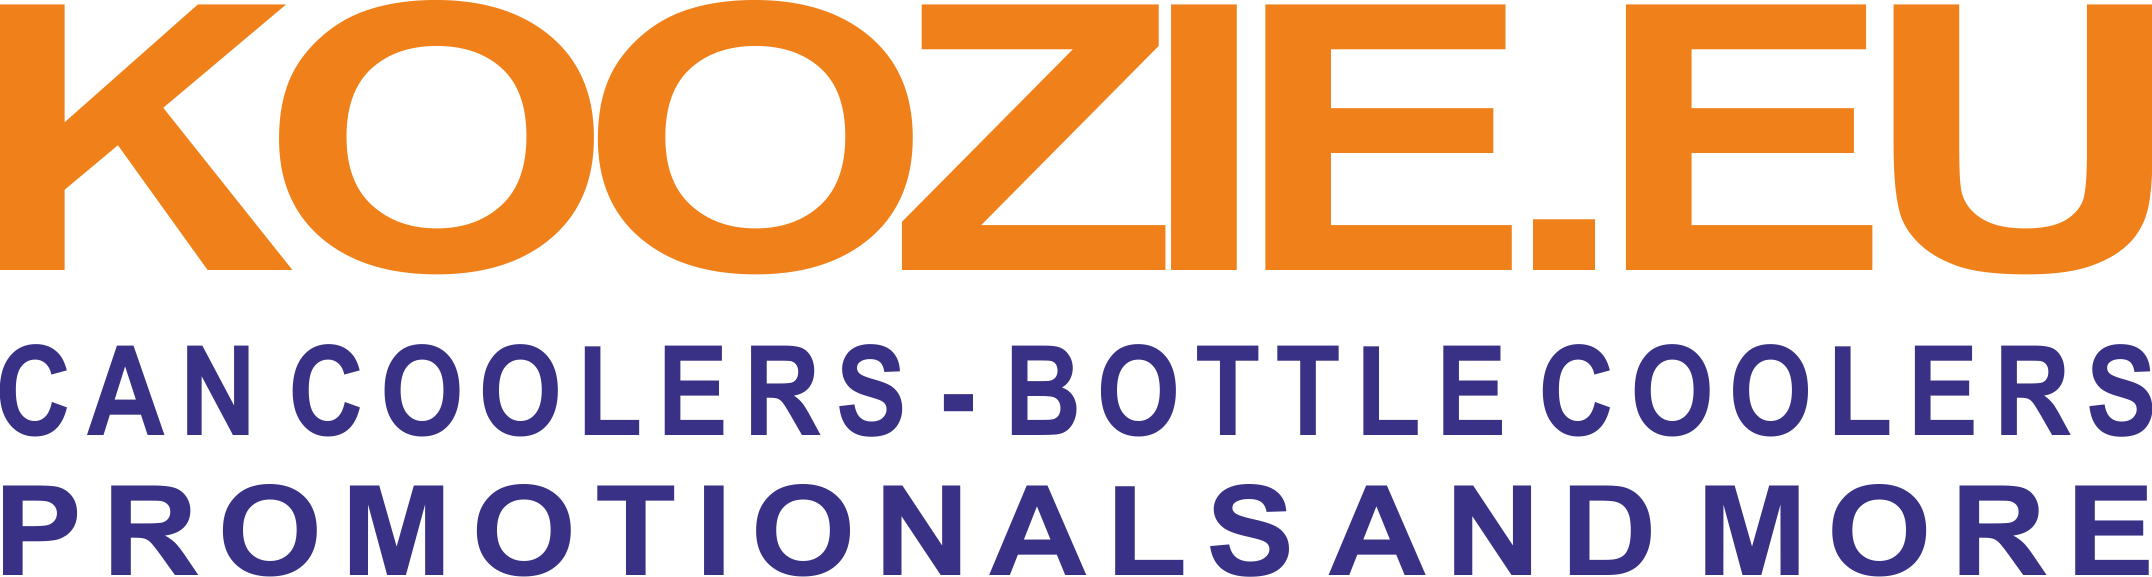 koozie_logo_English_2019